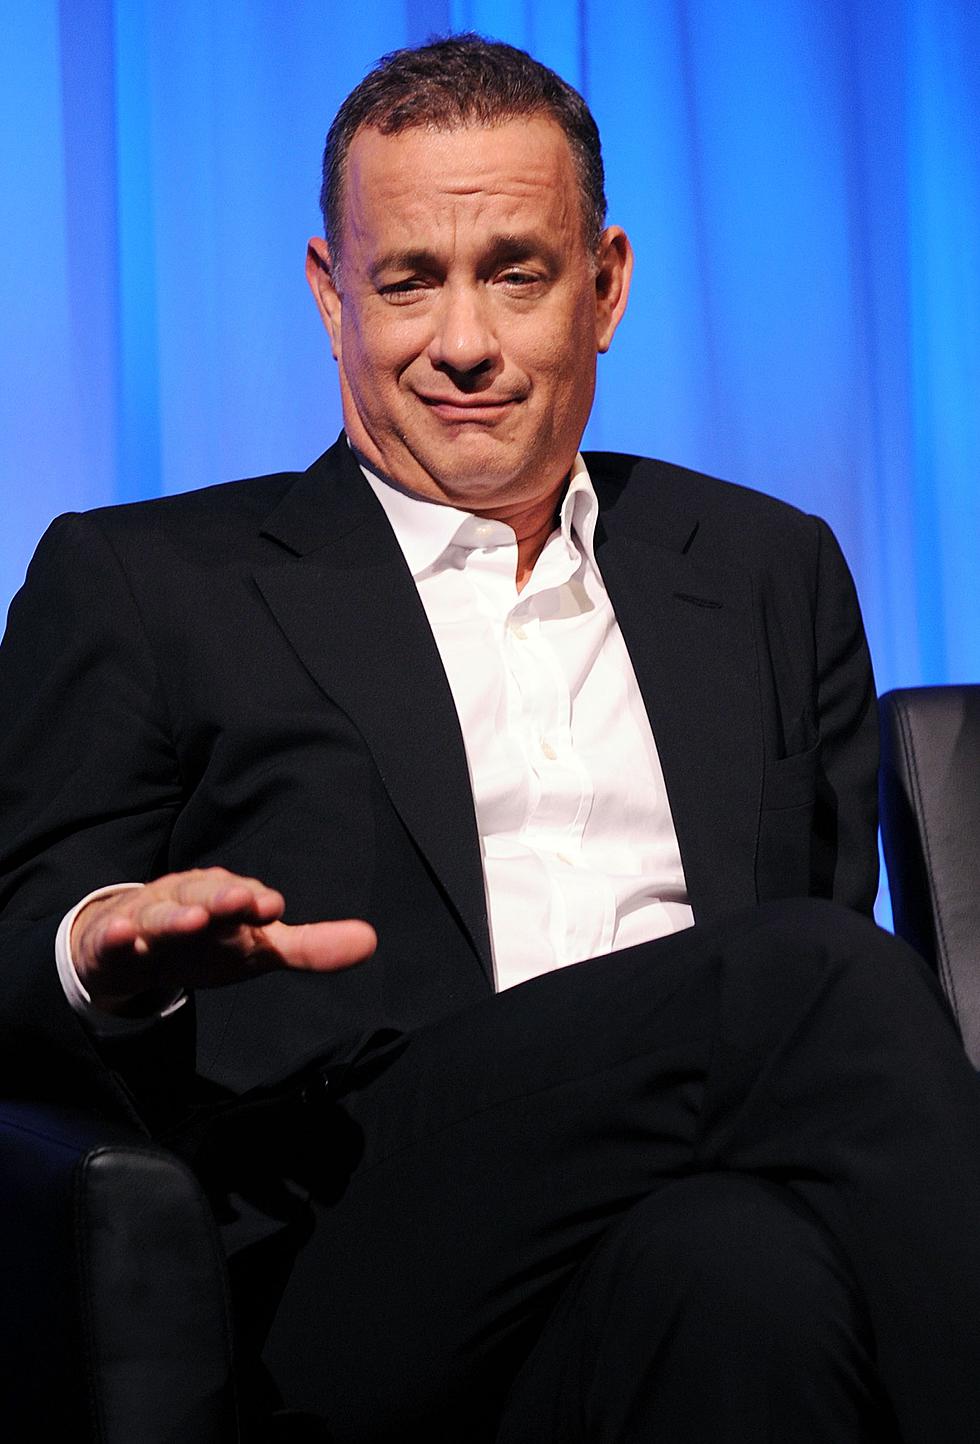 Tom Hanks Tells David Letterman That He Has Type 2 Diabetes